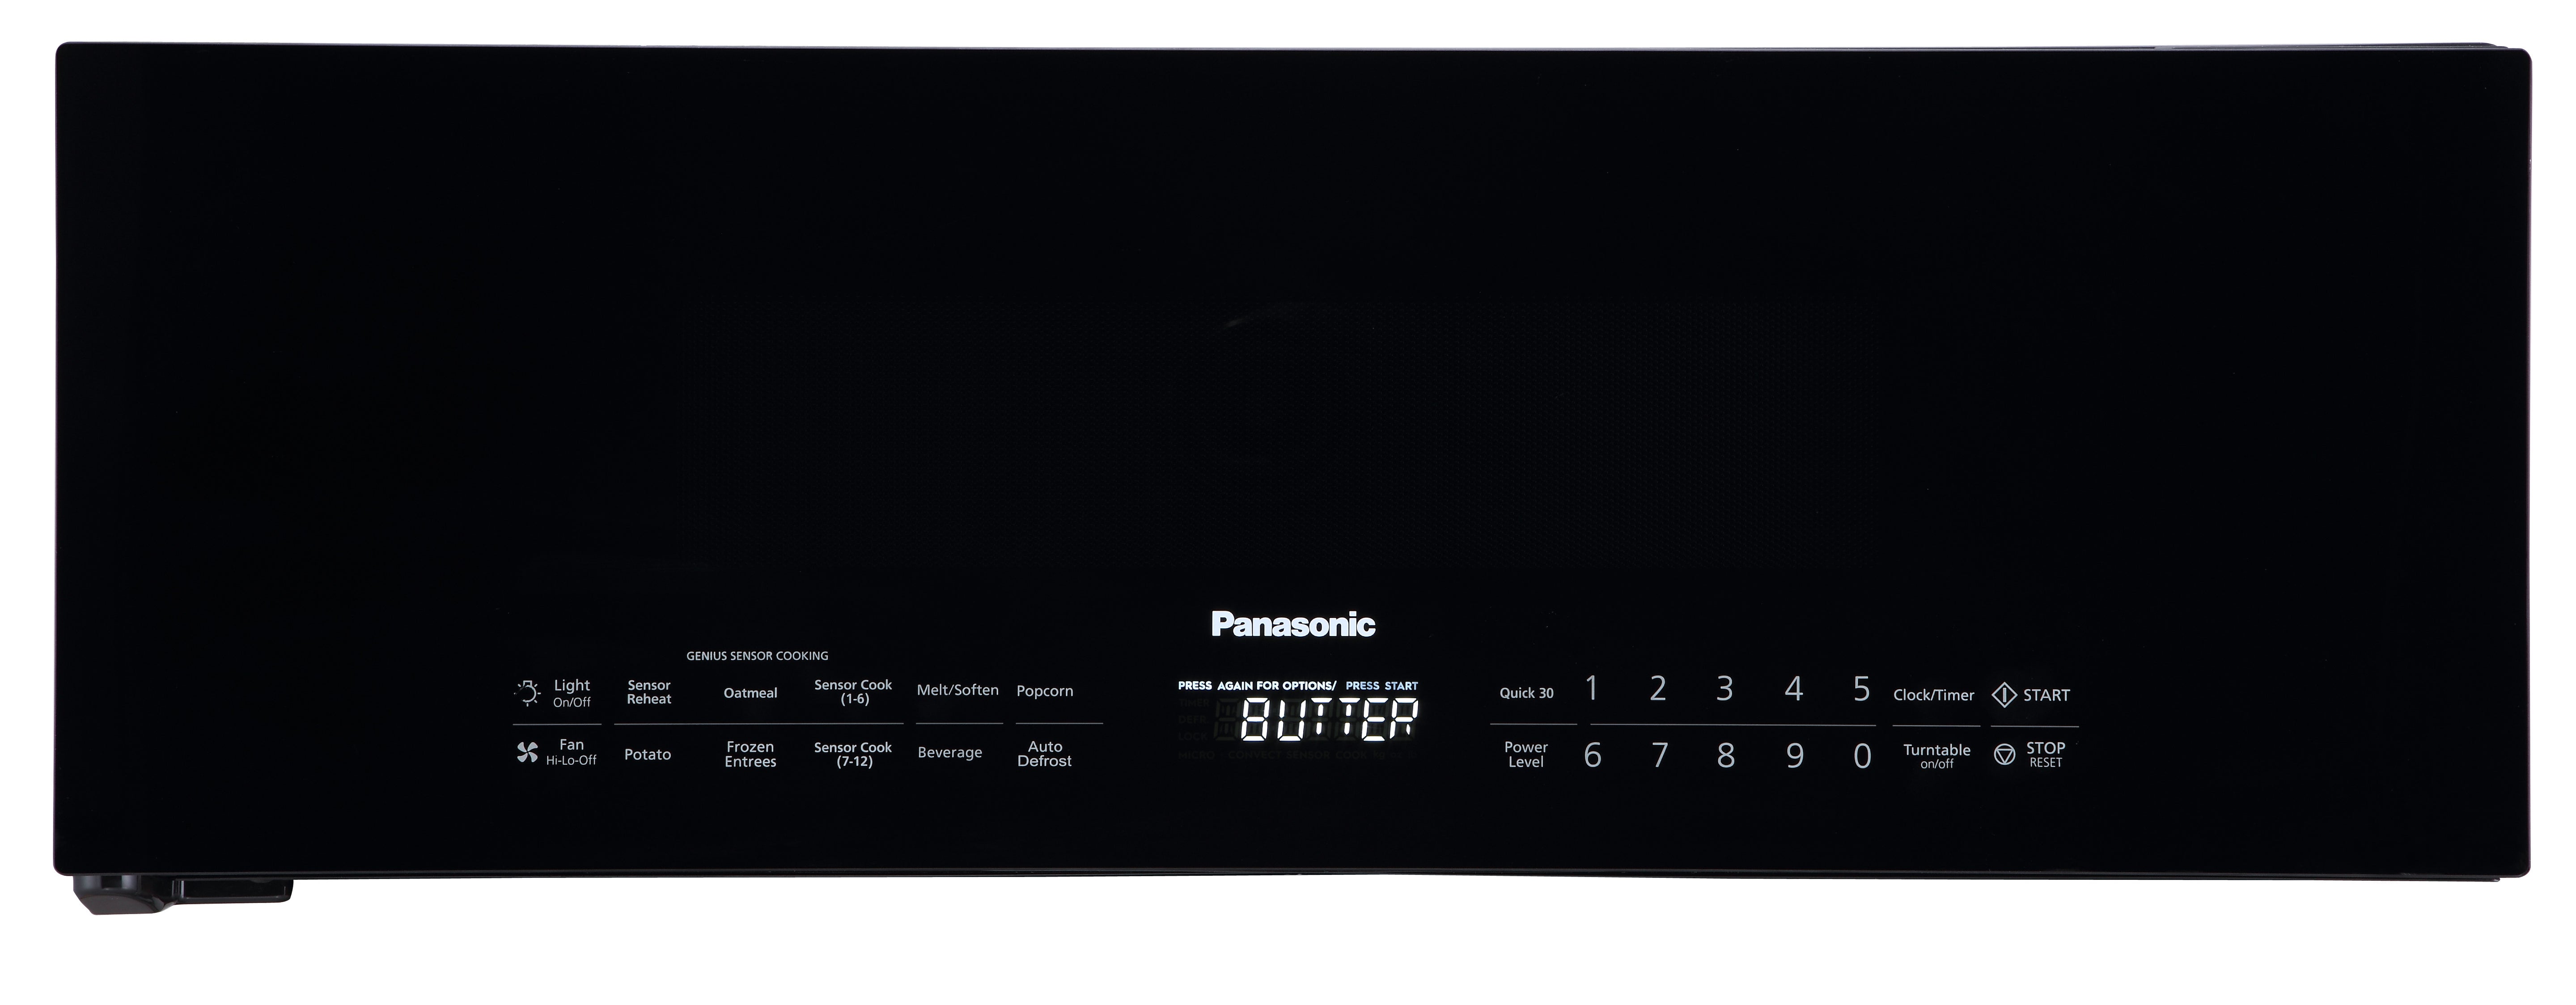 Panasonic - 1.2 cu. Ft  Over the range Microwave in Black - NNSG65NB